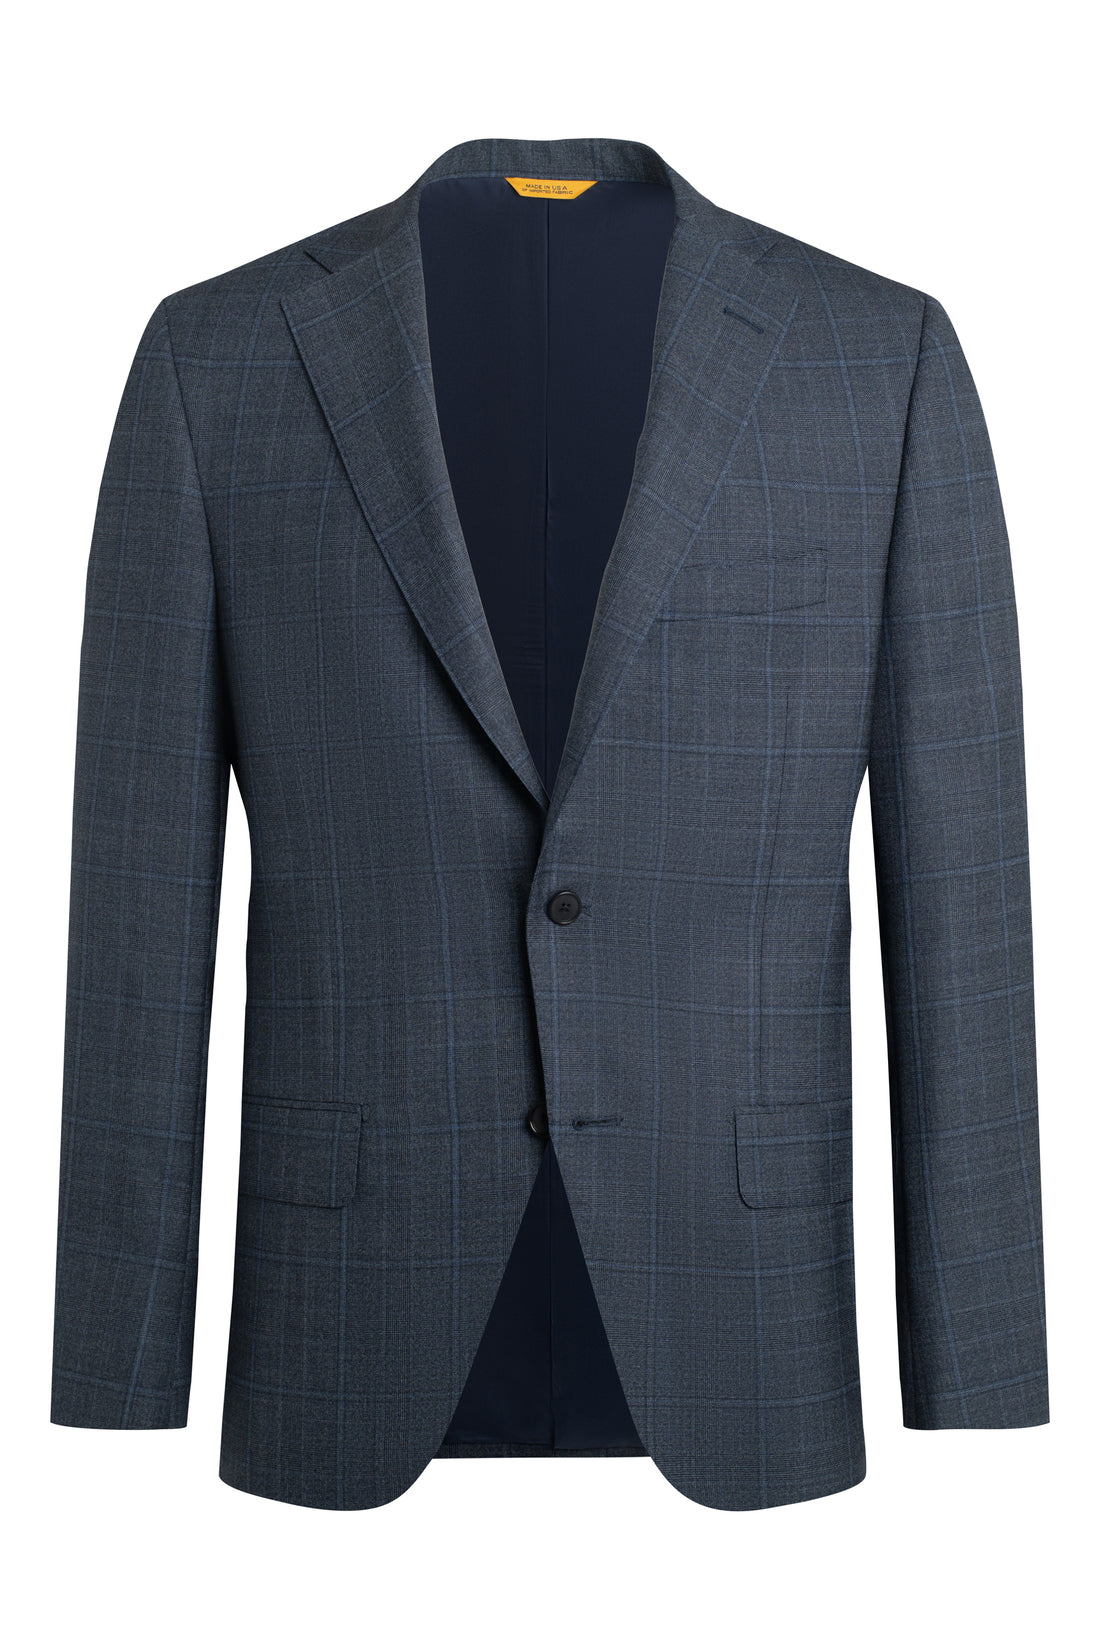 Slate Blue Tonal Plaid Suit Jacket